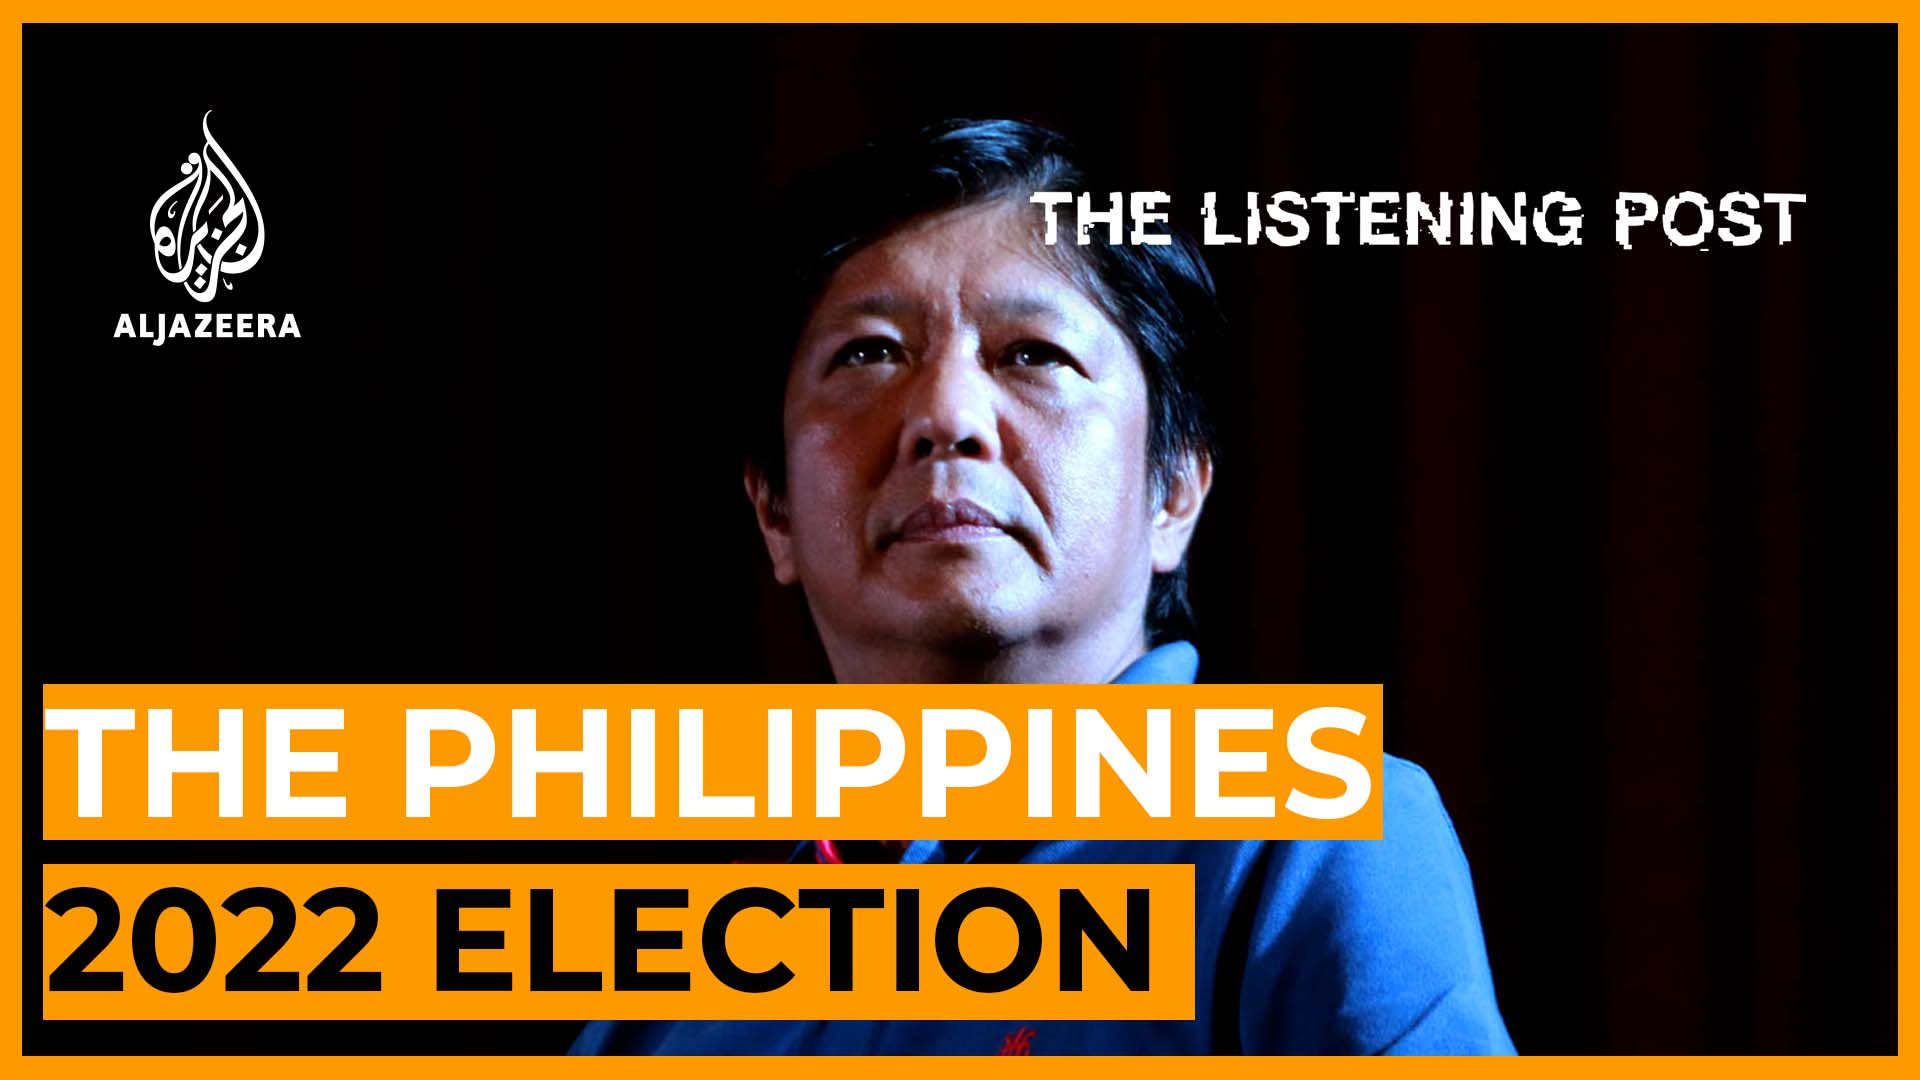 Philippines 2022: Authoritarian nostalgia vs hopes of reform | The Listening Post